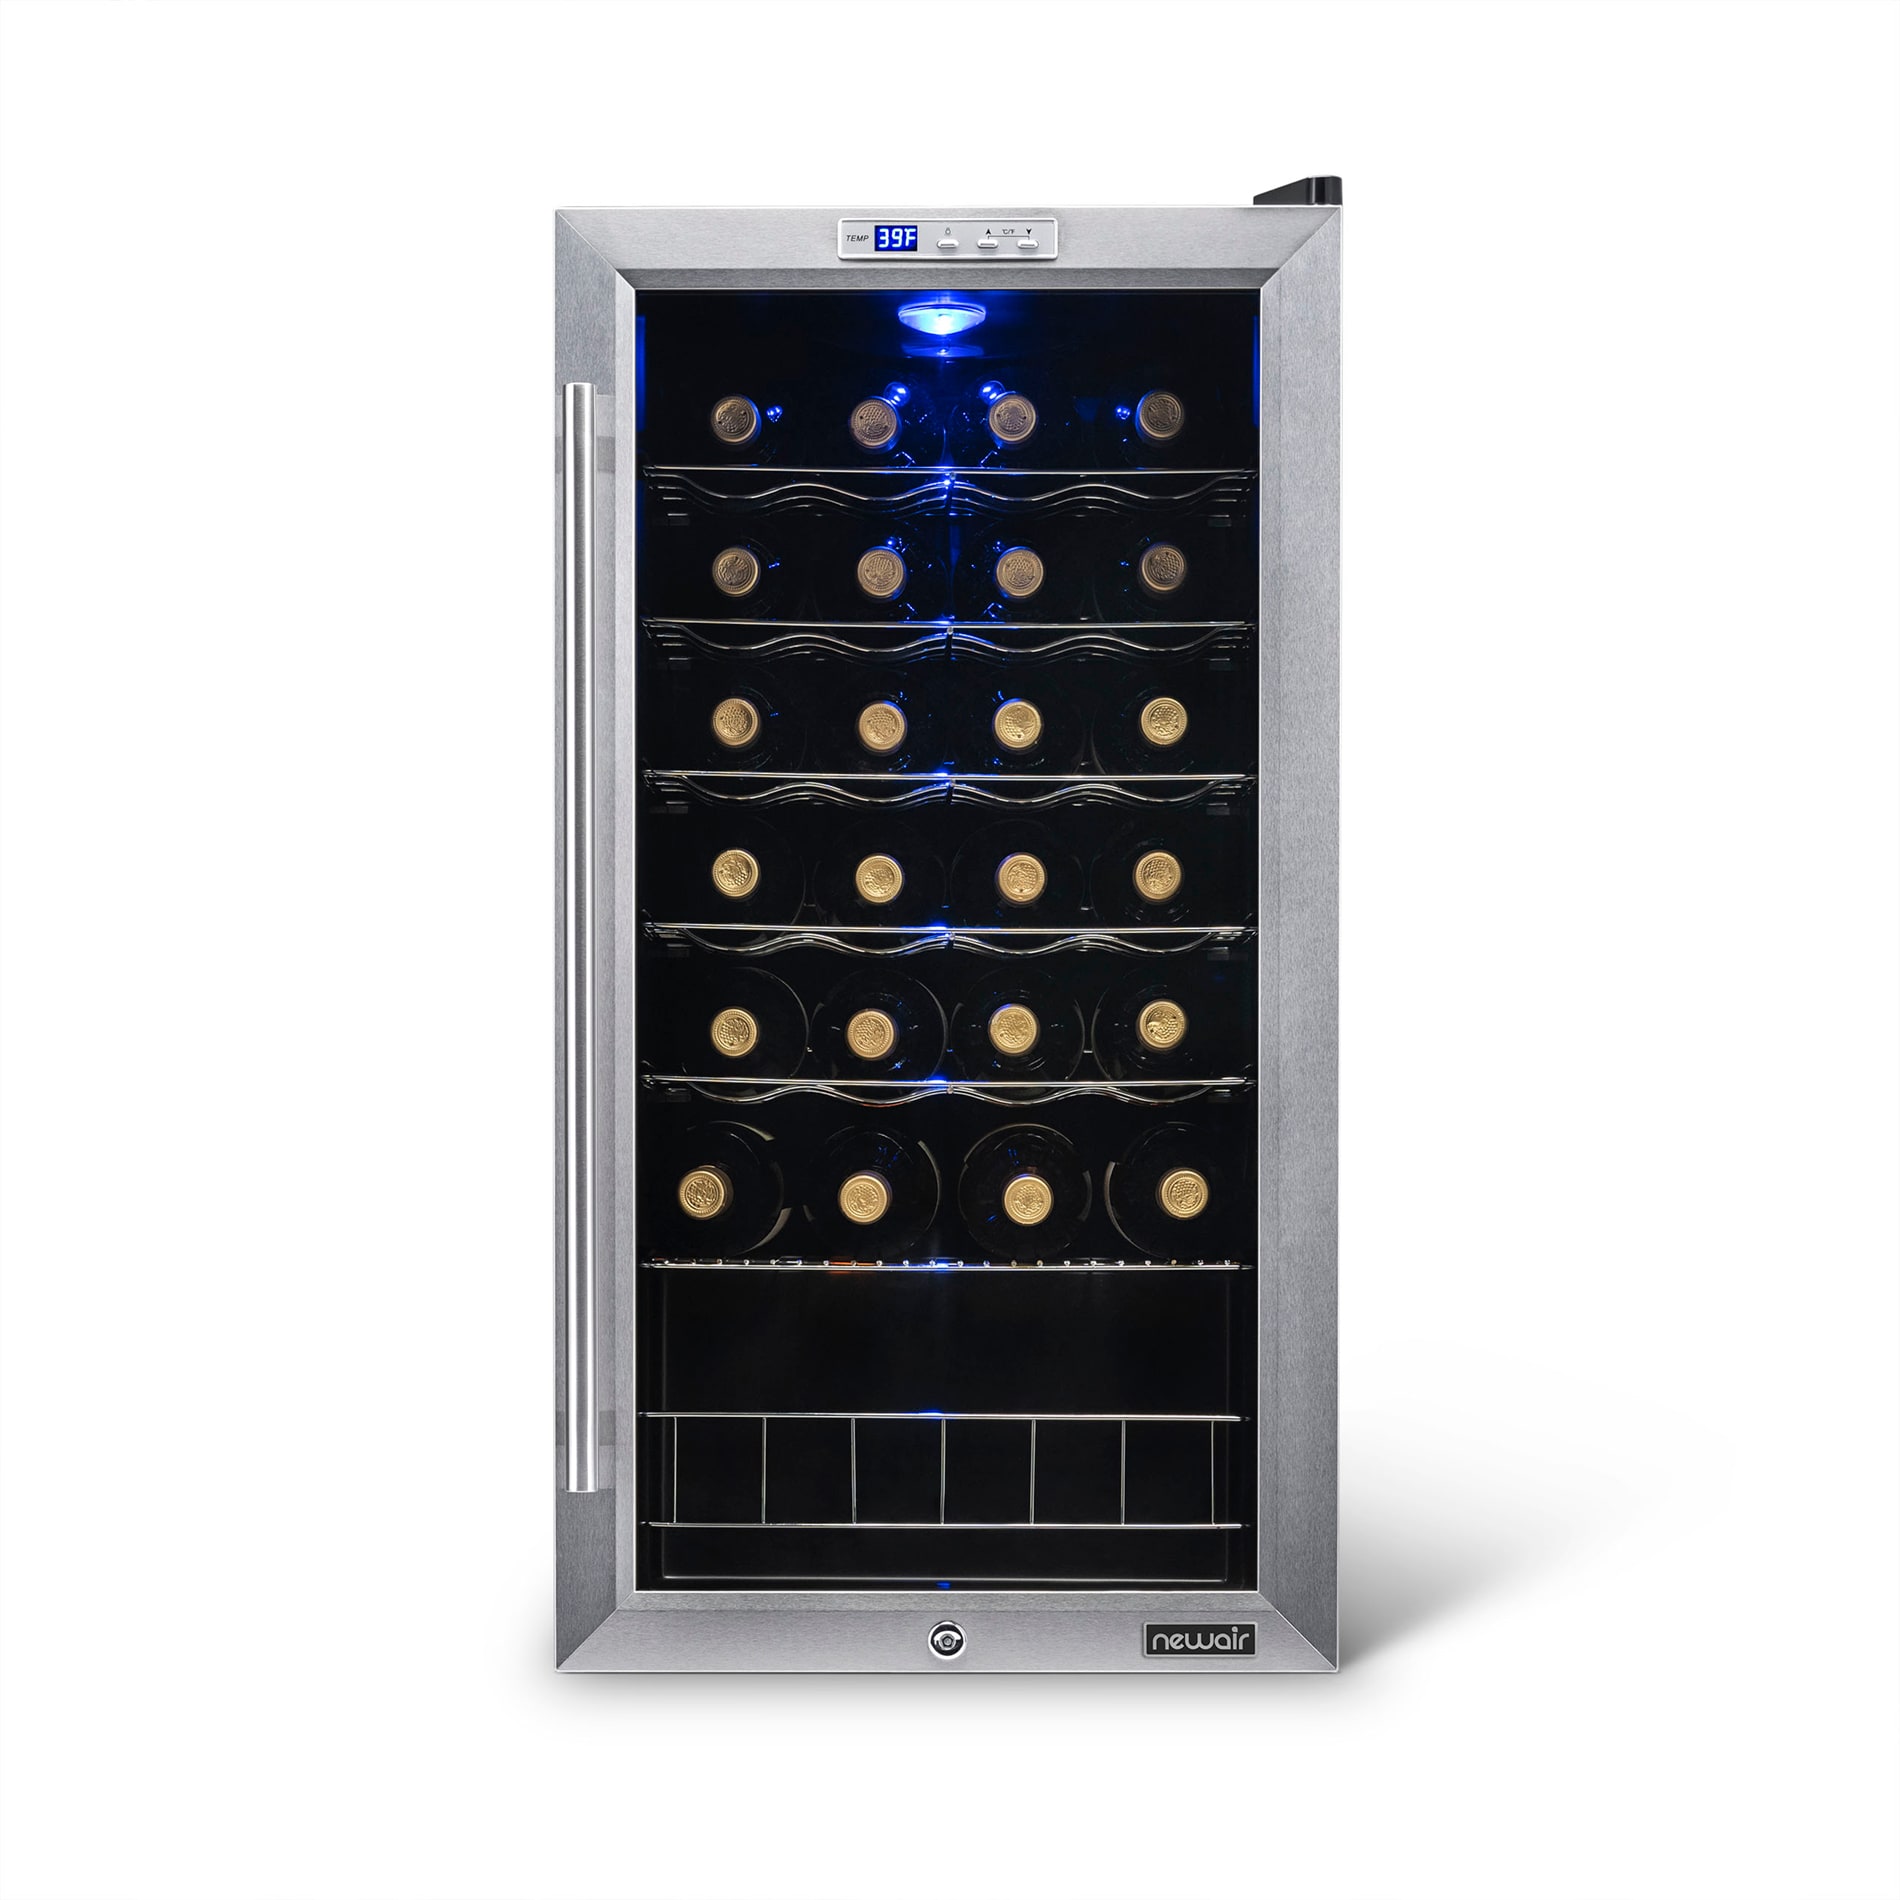 Black + Decker BLACK+DECKER 17.5'' 26 Bottle Single Zone Freestanding Wine  Refrigerator & Reviews